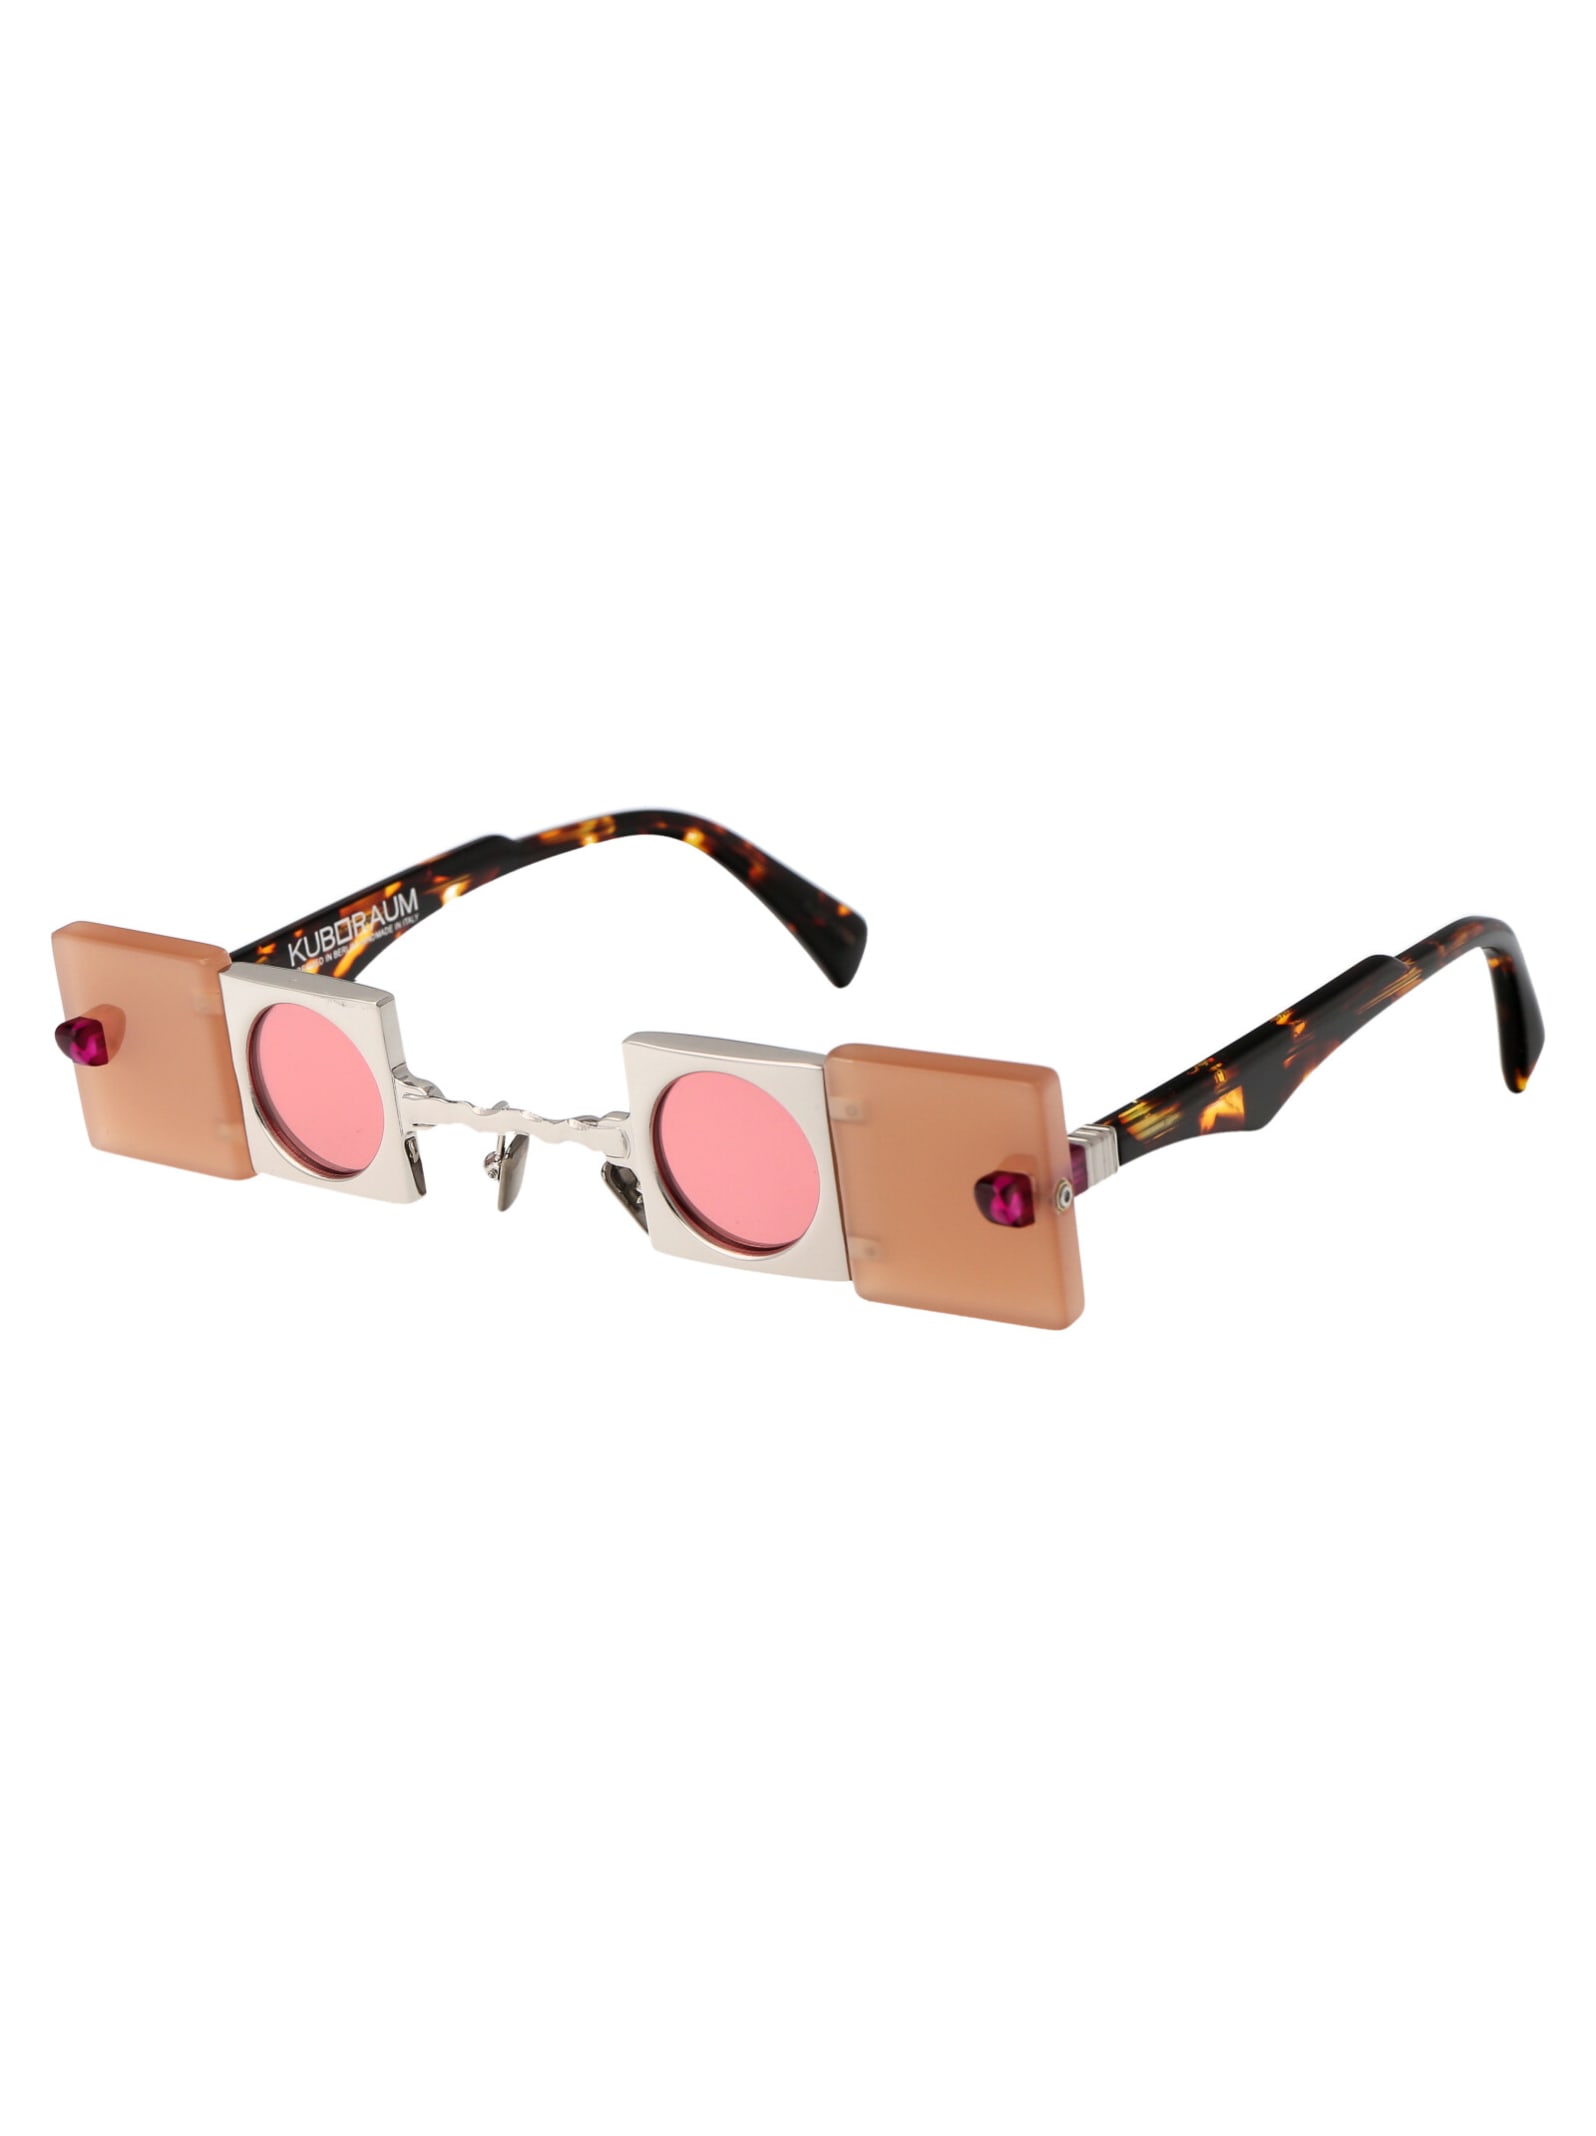 Shop Kuboraum Maske Q50 Sunglasses In Pl Rp R. Pink